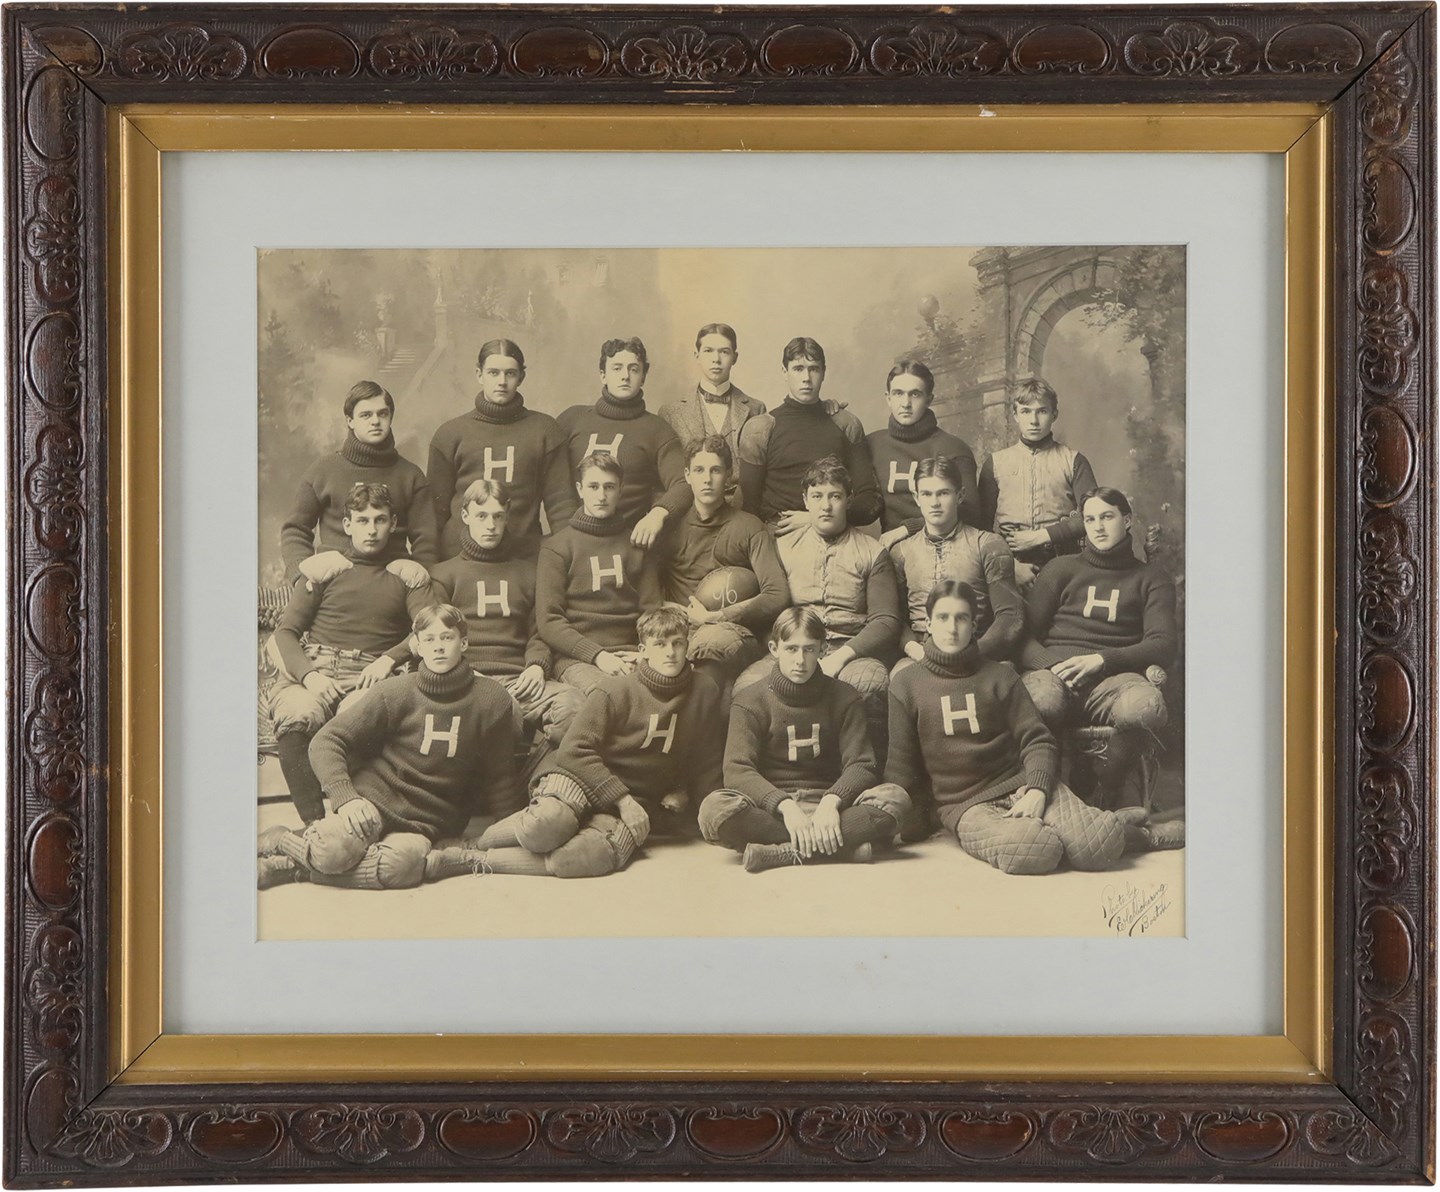 - 1896 Harvard Football Imperial Team Photograph by Elmer Chickering